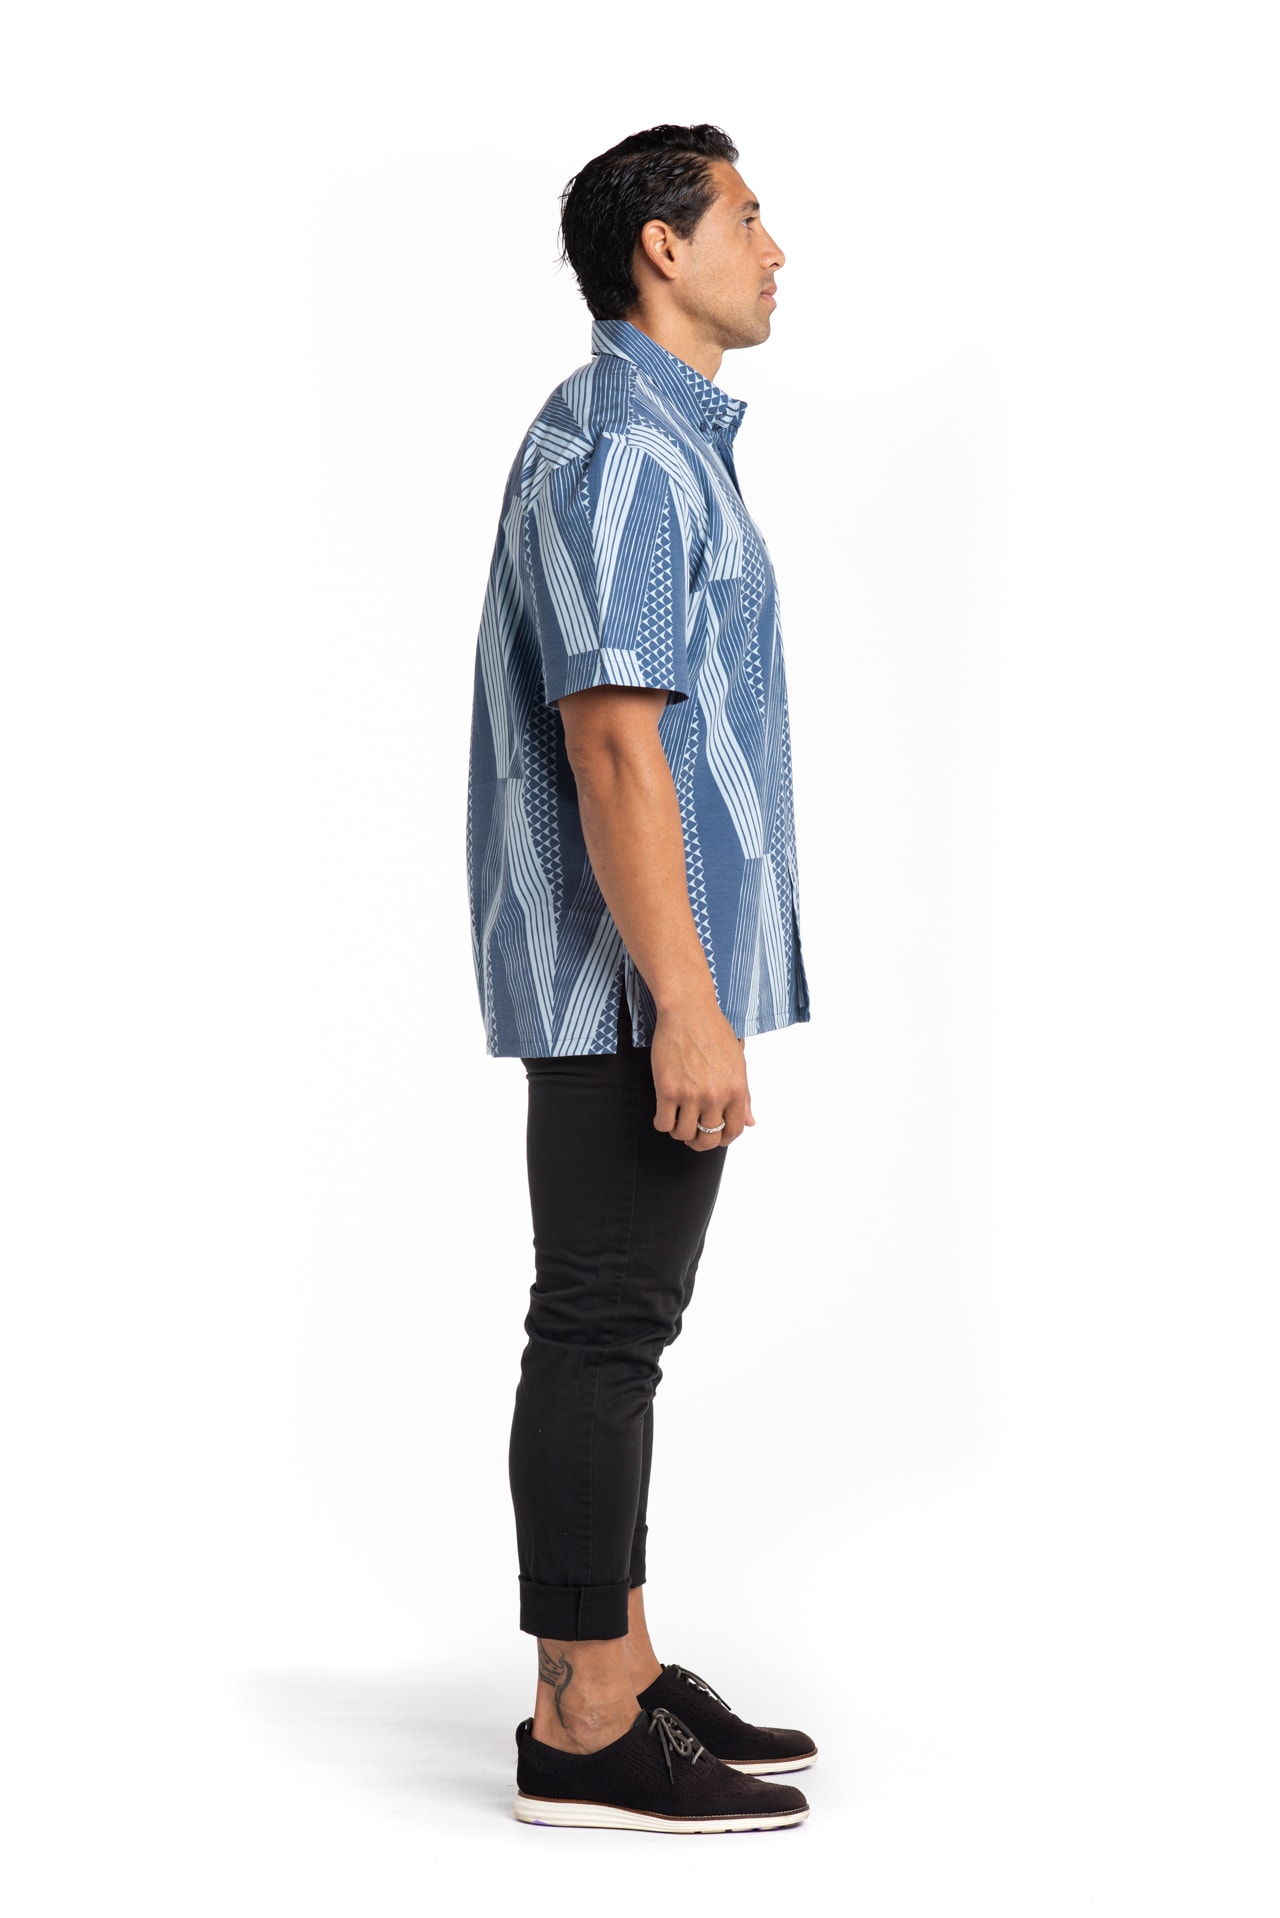 Male model wearing Mahalo Nui Shirt - Side View